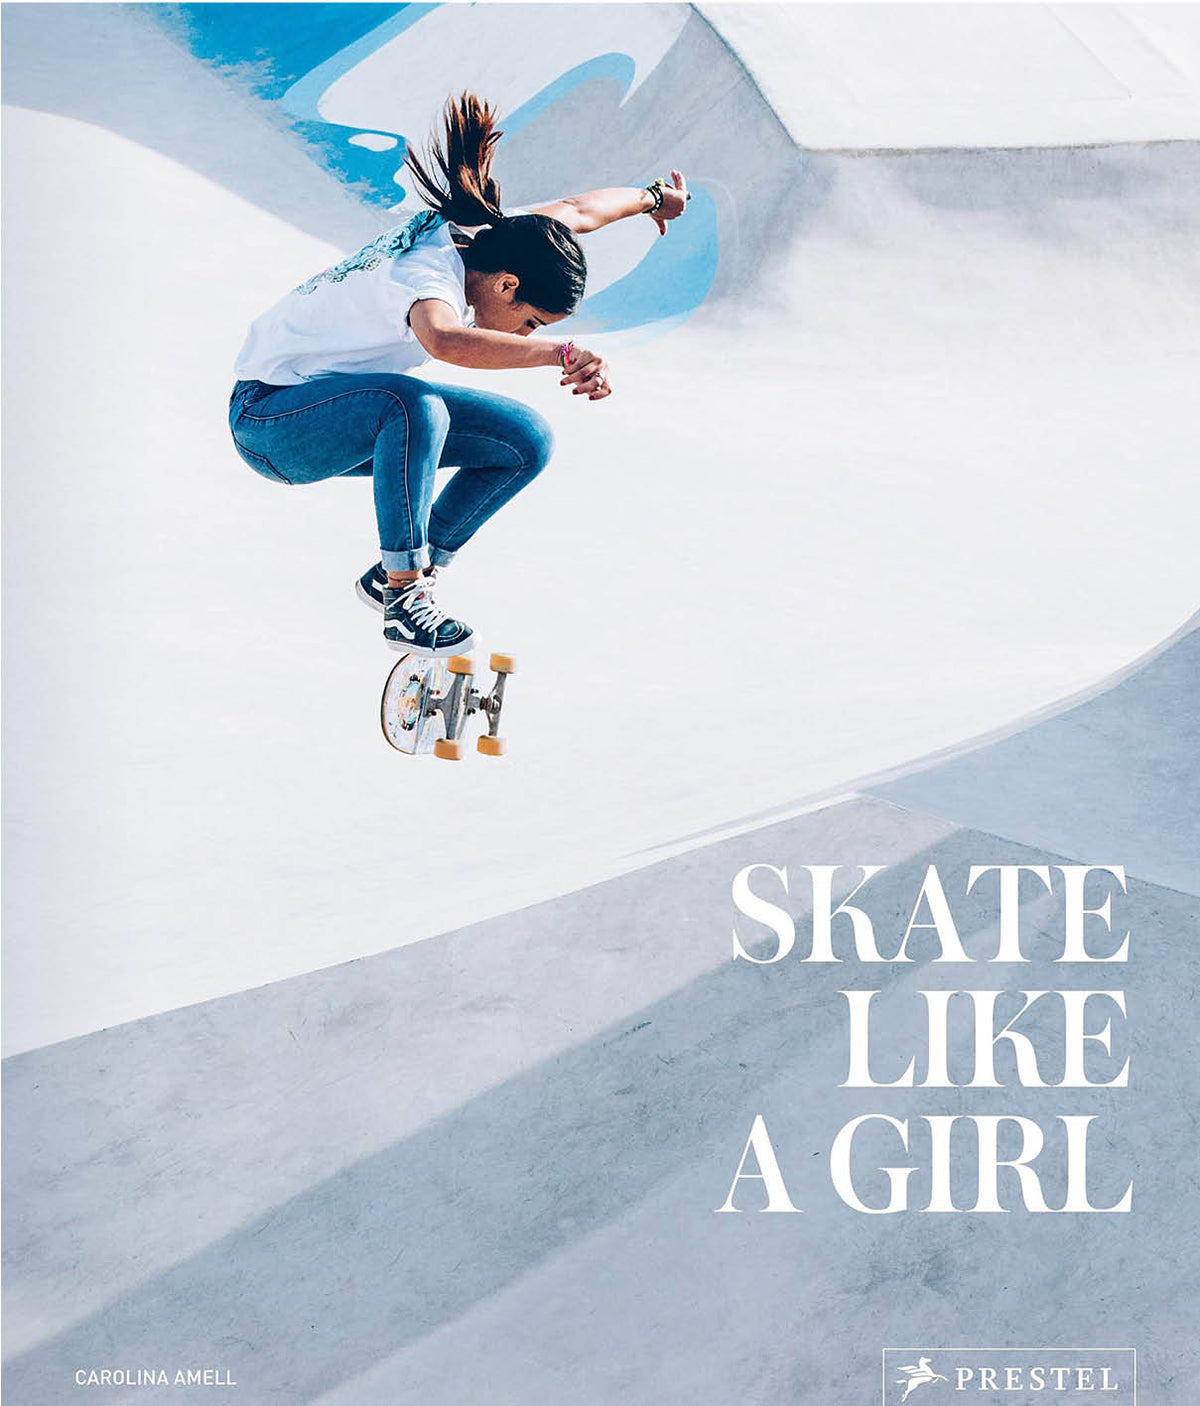 Skate Like A Girl by Carolina Amell